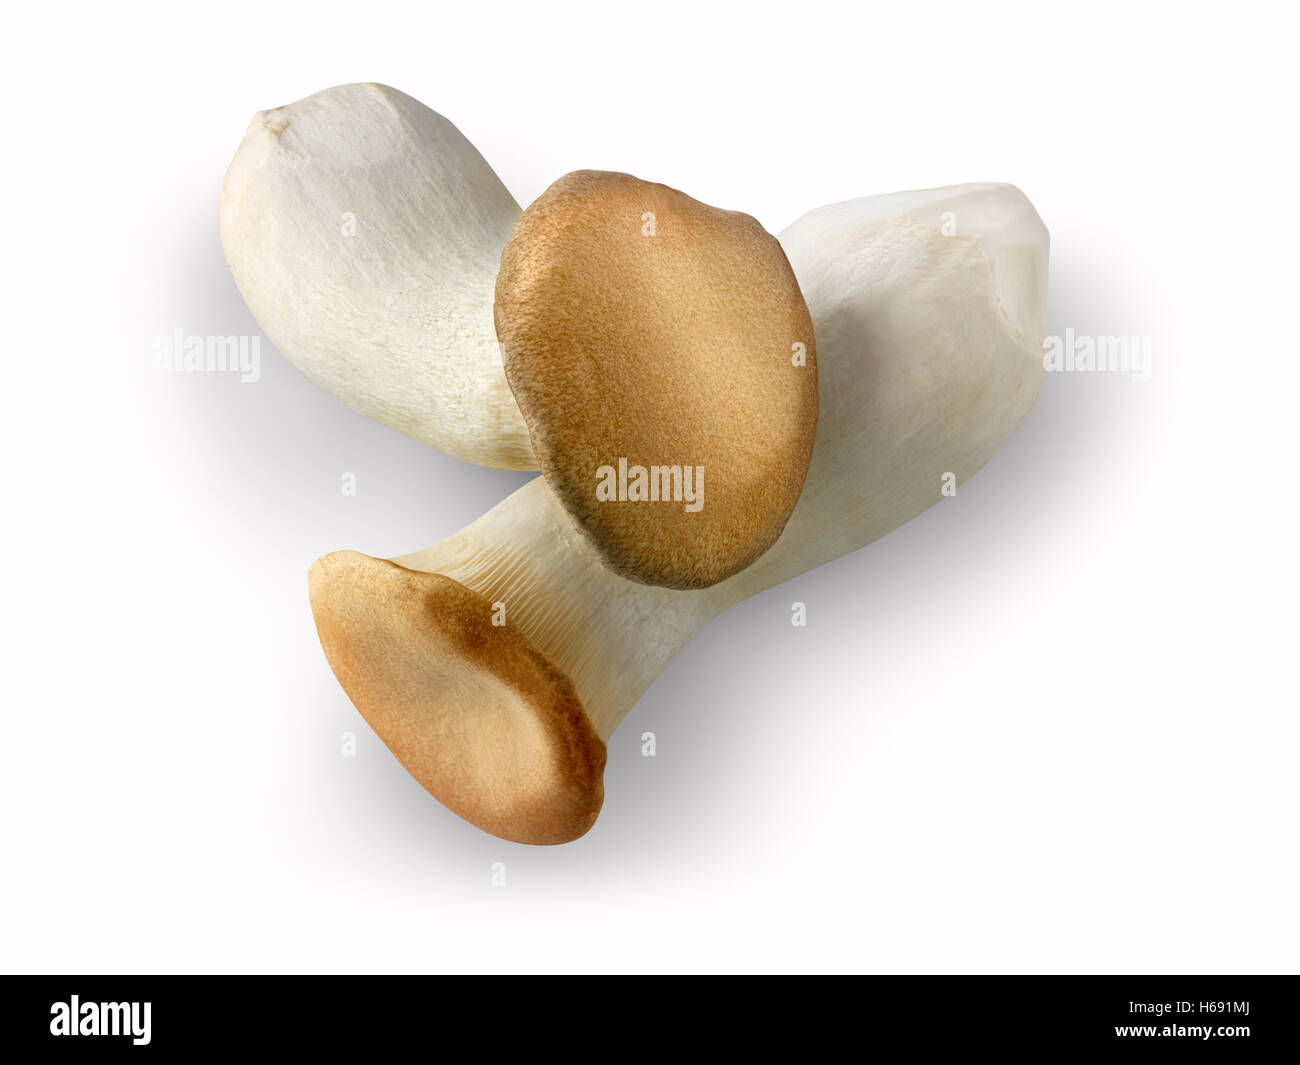 https://c8.alamy.com/comp/H691MJ/fresh-picked-pleurotus-eryngii-straw-mushrooms-un-cooked-H691MJ.jpg